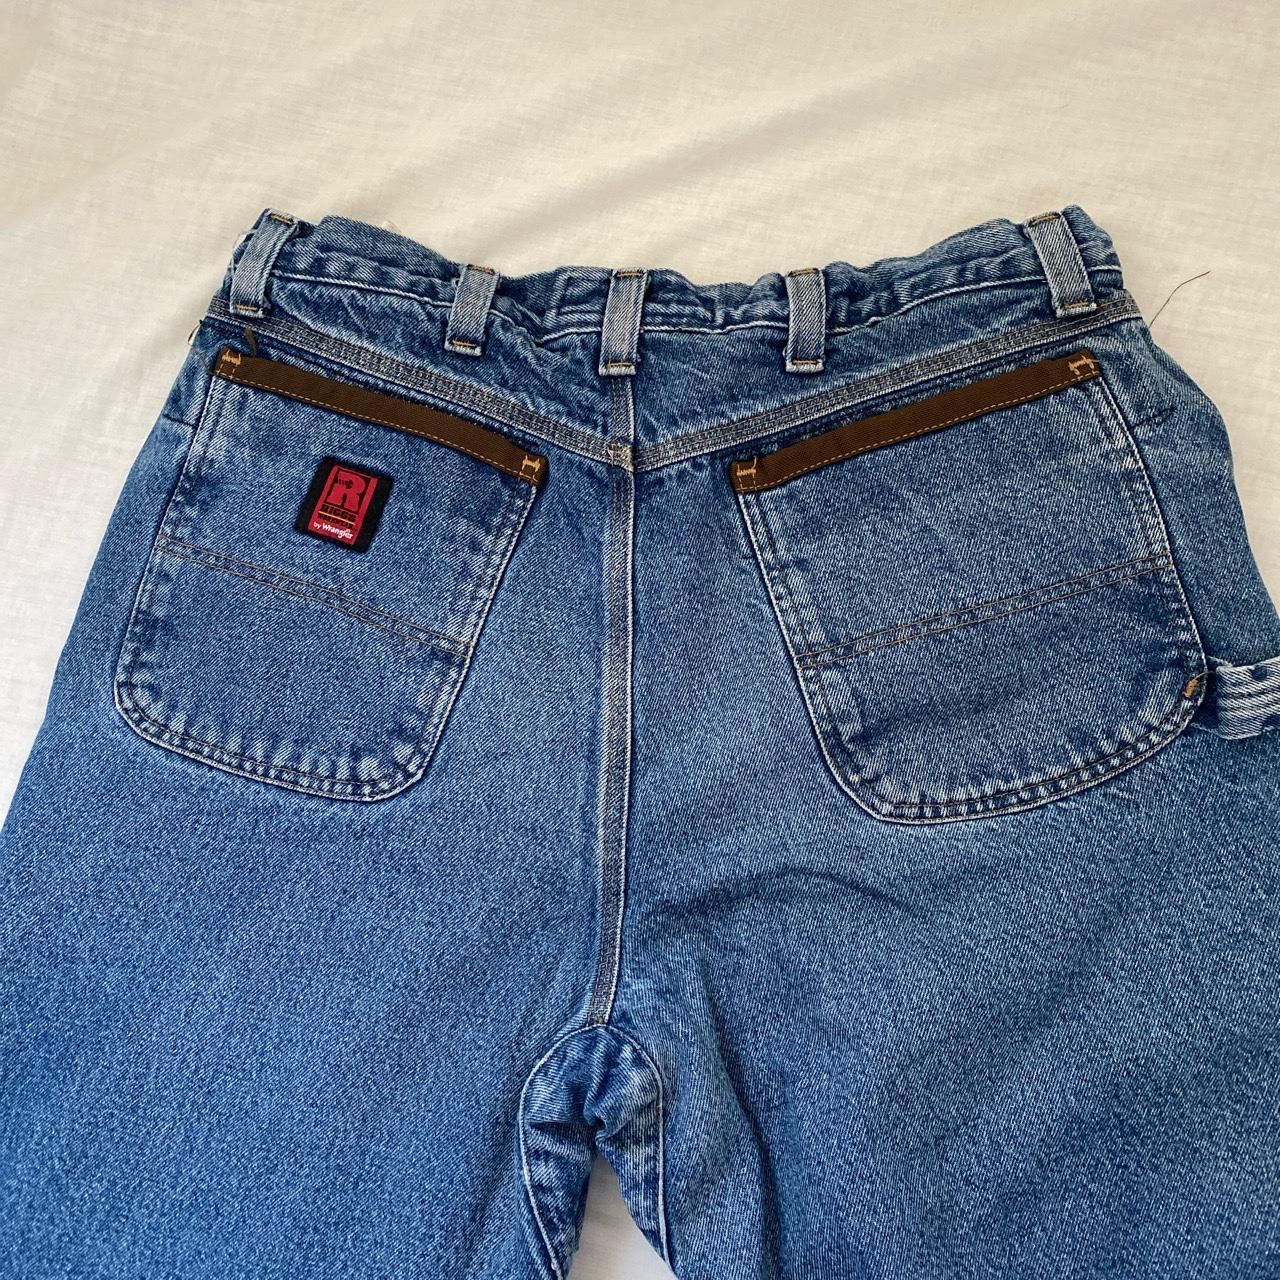 RARE - vintage RIGGS workwear jeans by... - Depop